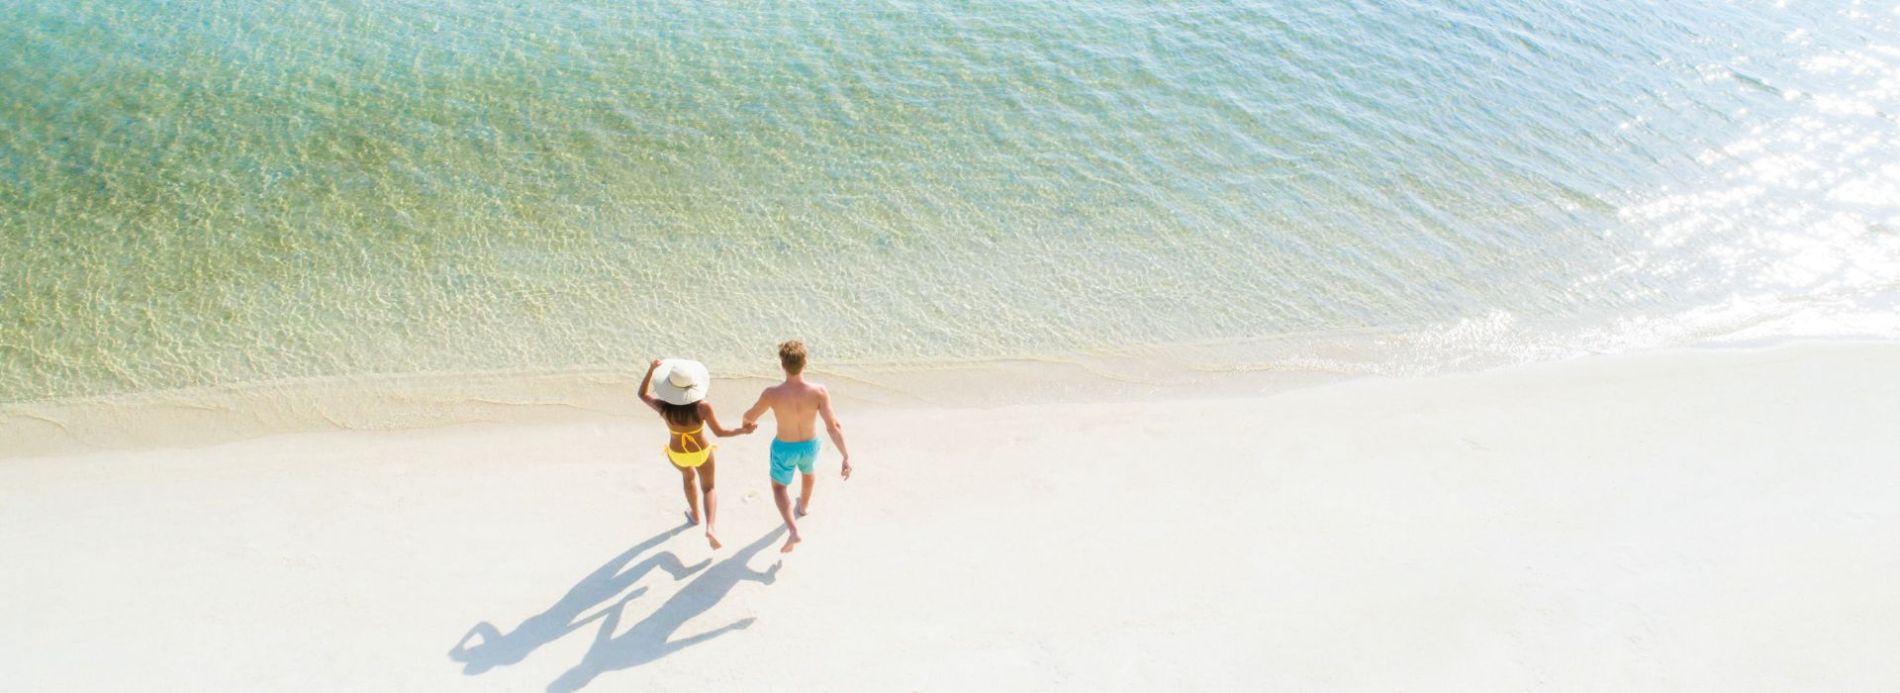 Romantic Activities to Enjoy Near Mexico Beach, Florida Feature Image